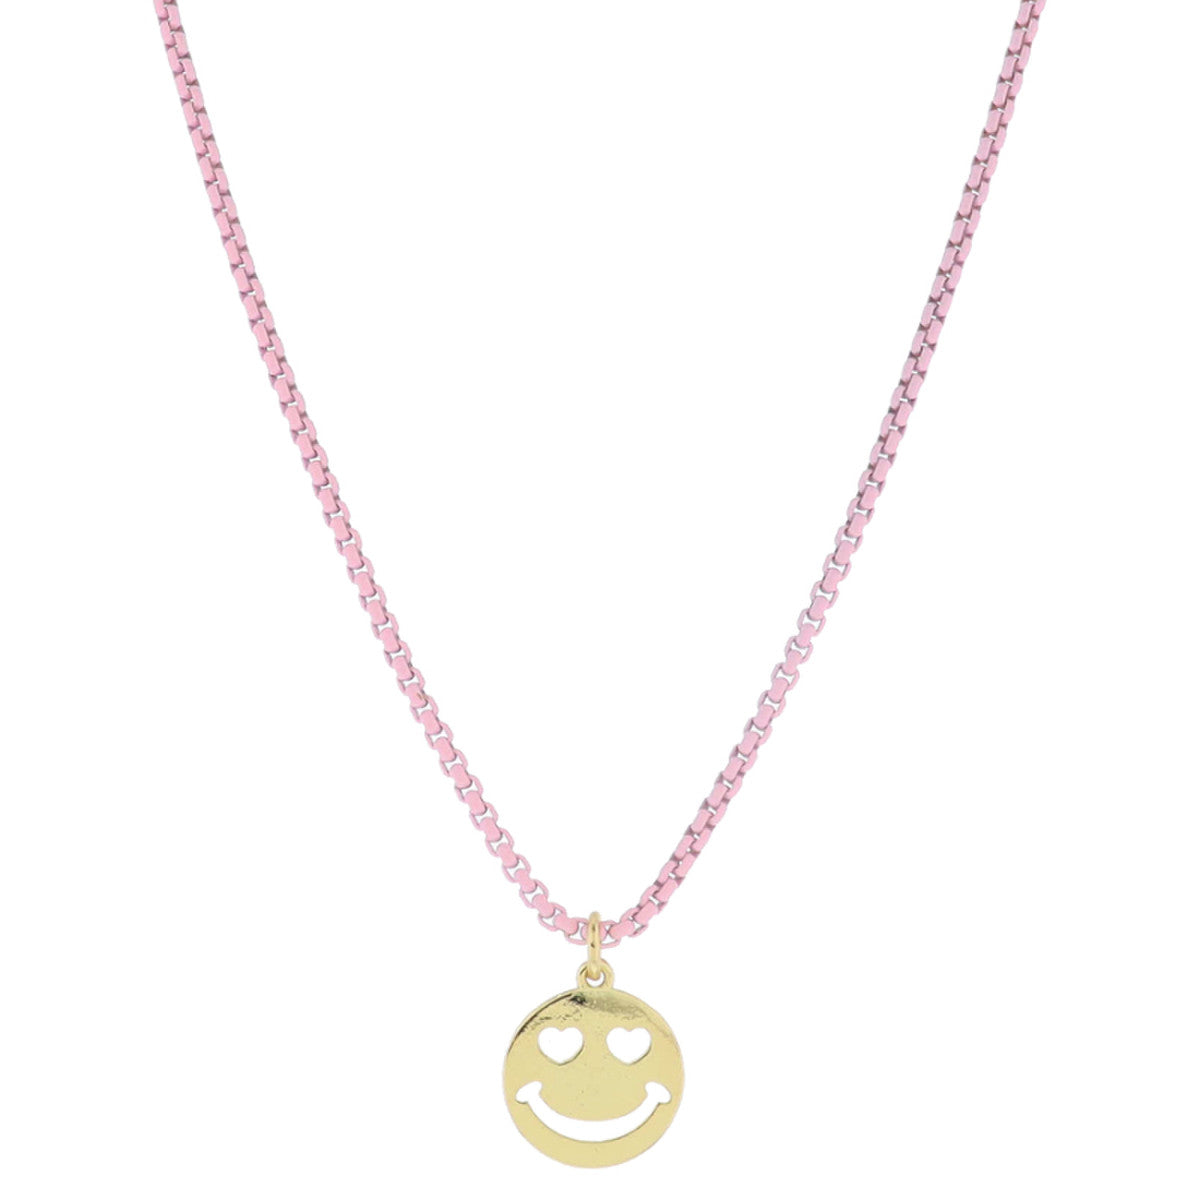 Kids Happy Face Necklace - Light Pink